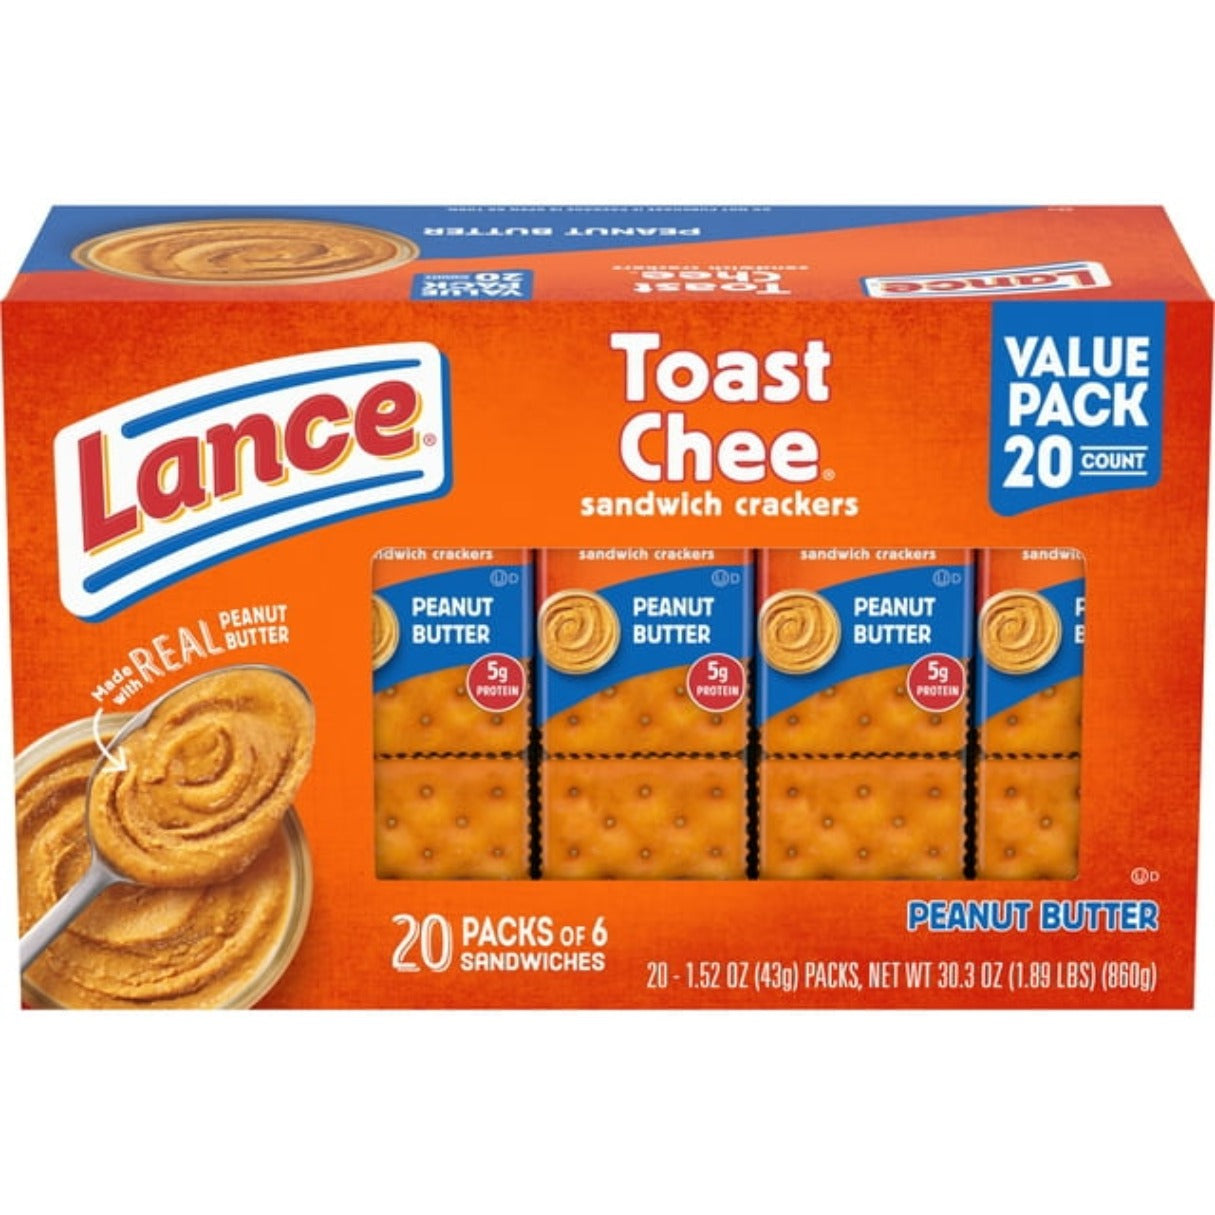 Lance Sandwich Crackers ToastChee Peanut Butter - 20ct